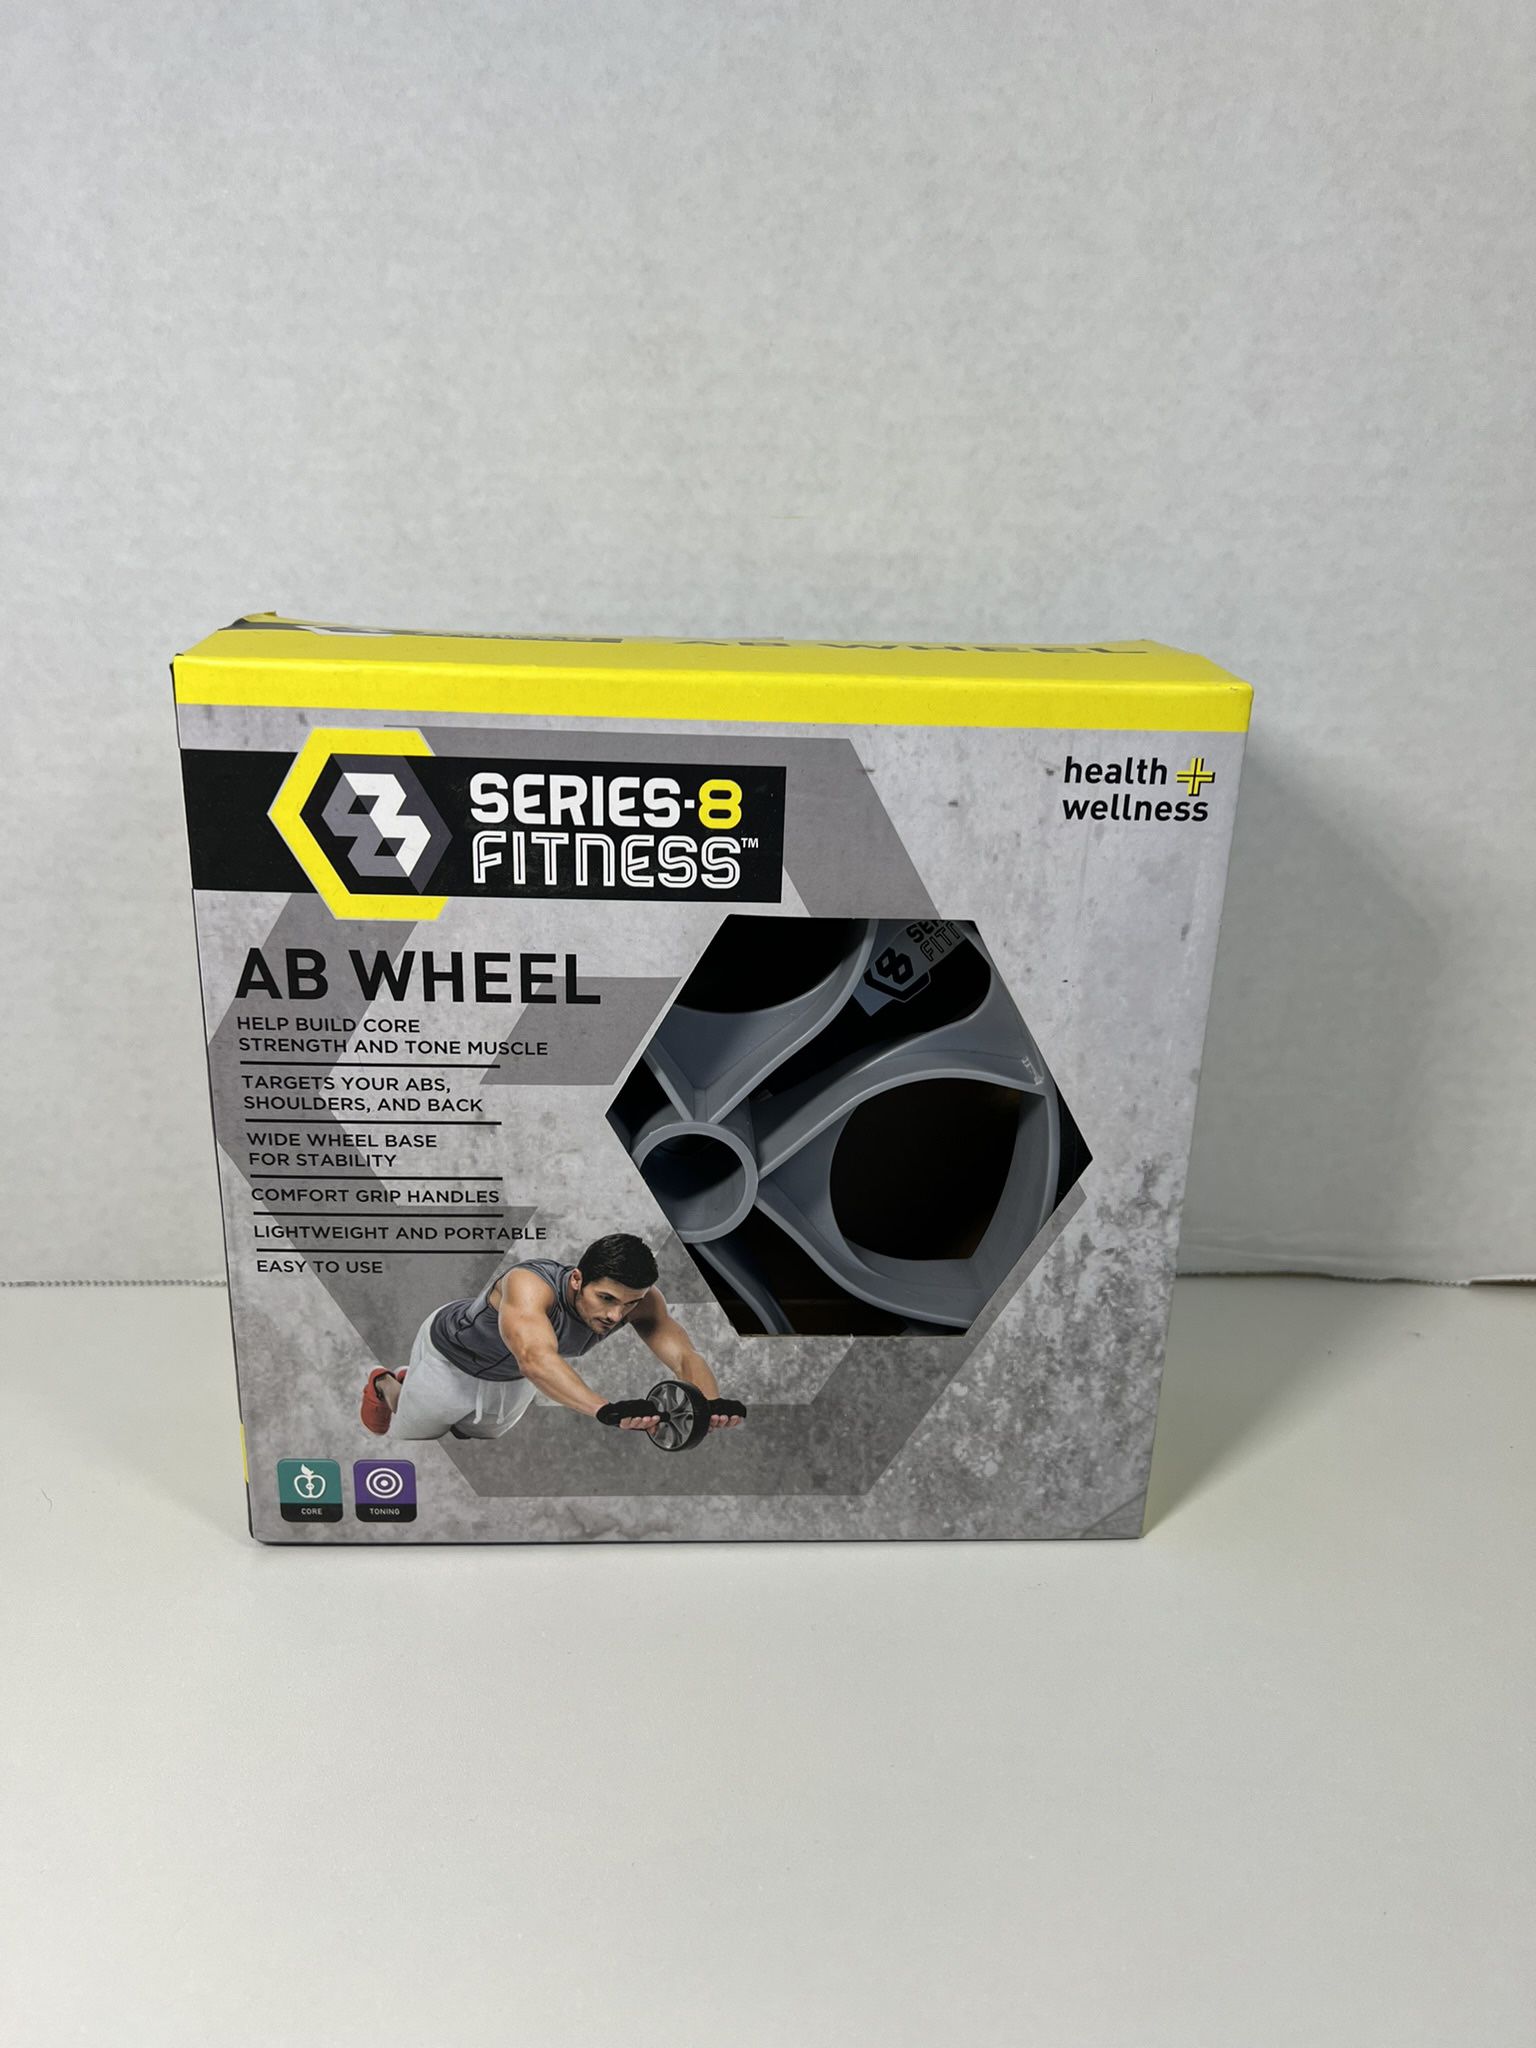 Series-8 Fitness Ab Wheel Roller